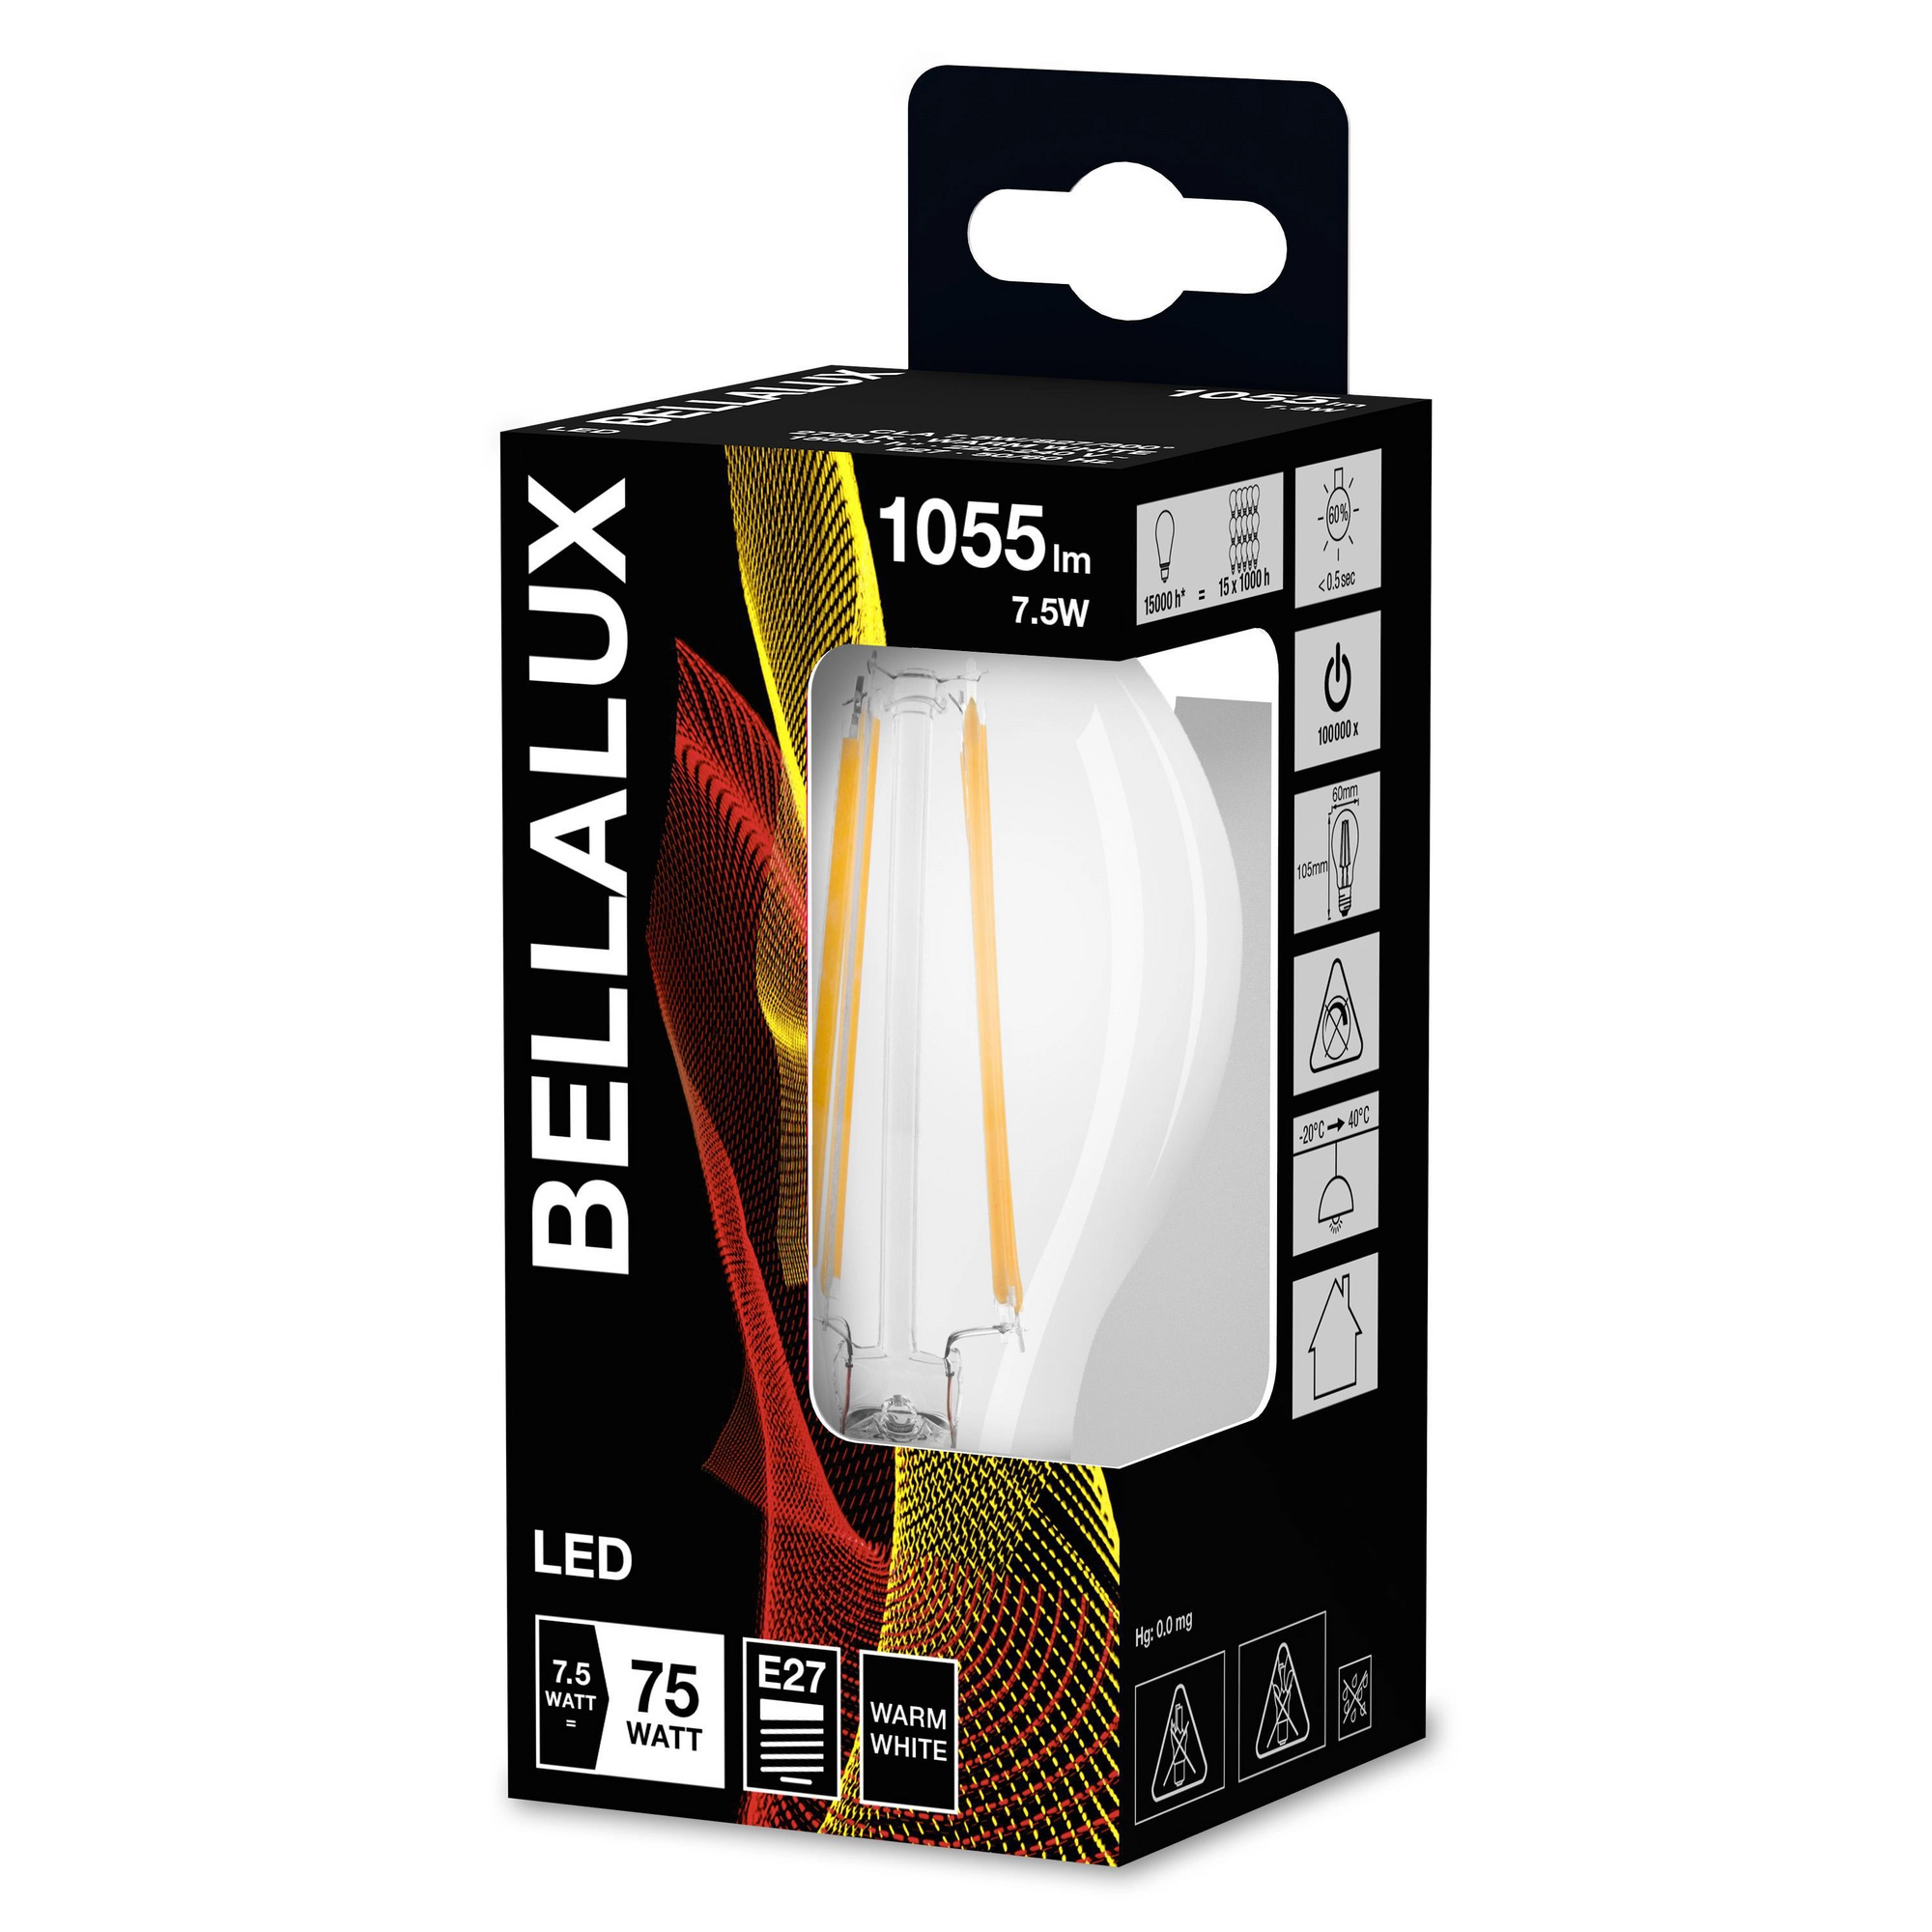 Bellalux Lampadina LED classica a filamento E27 Bianco caldo 75 W / 1'055 lm